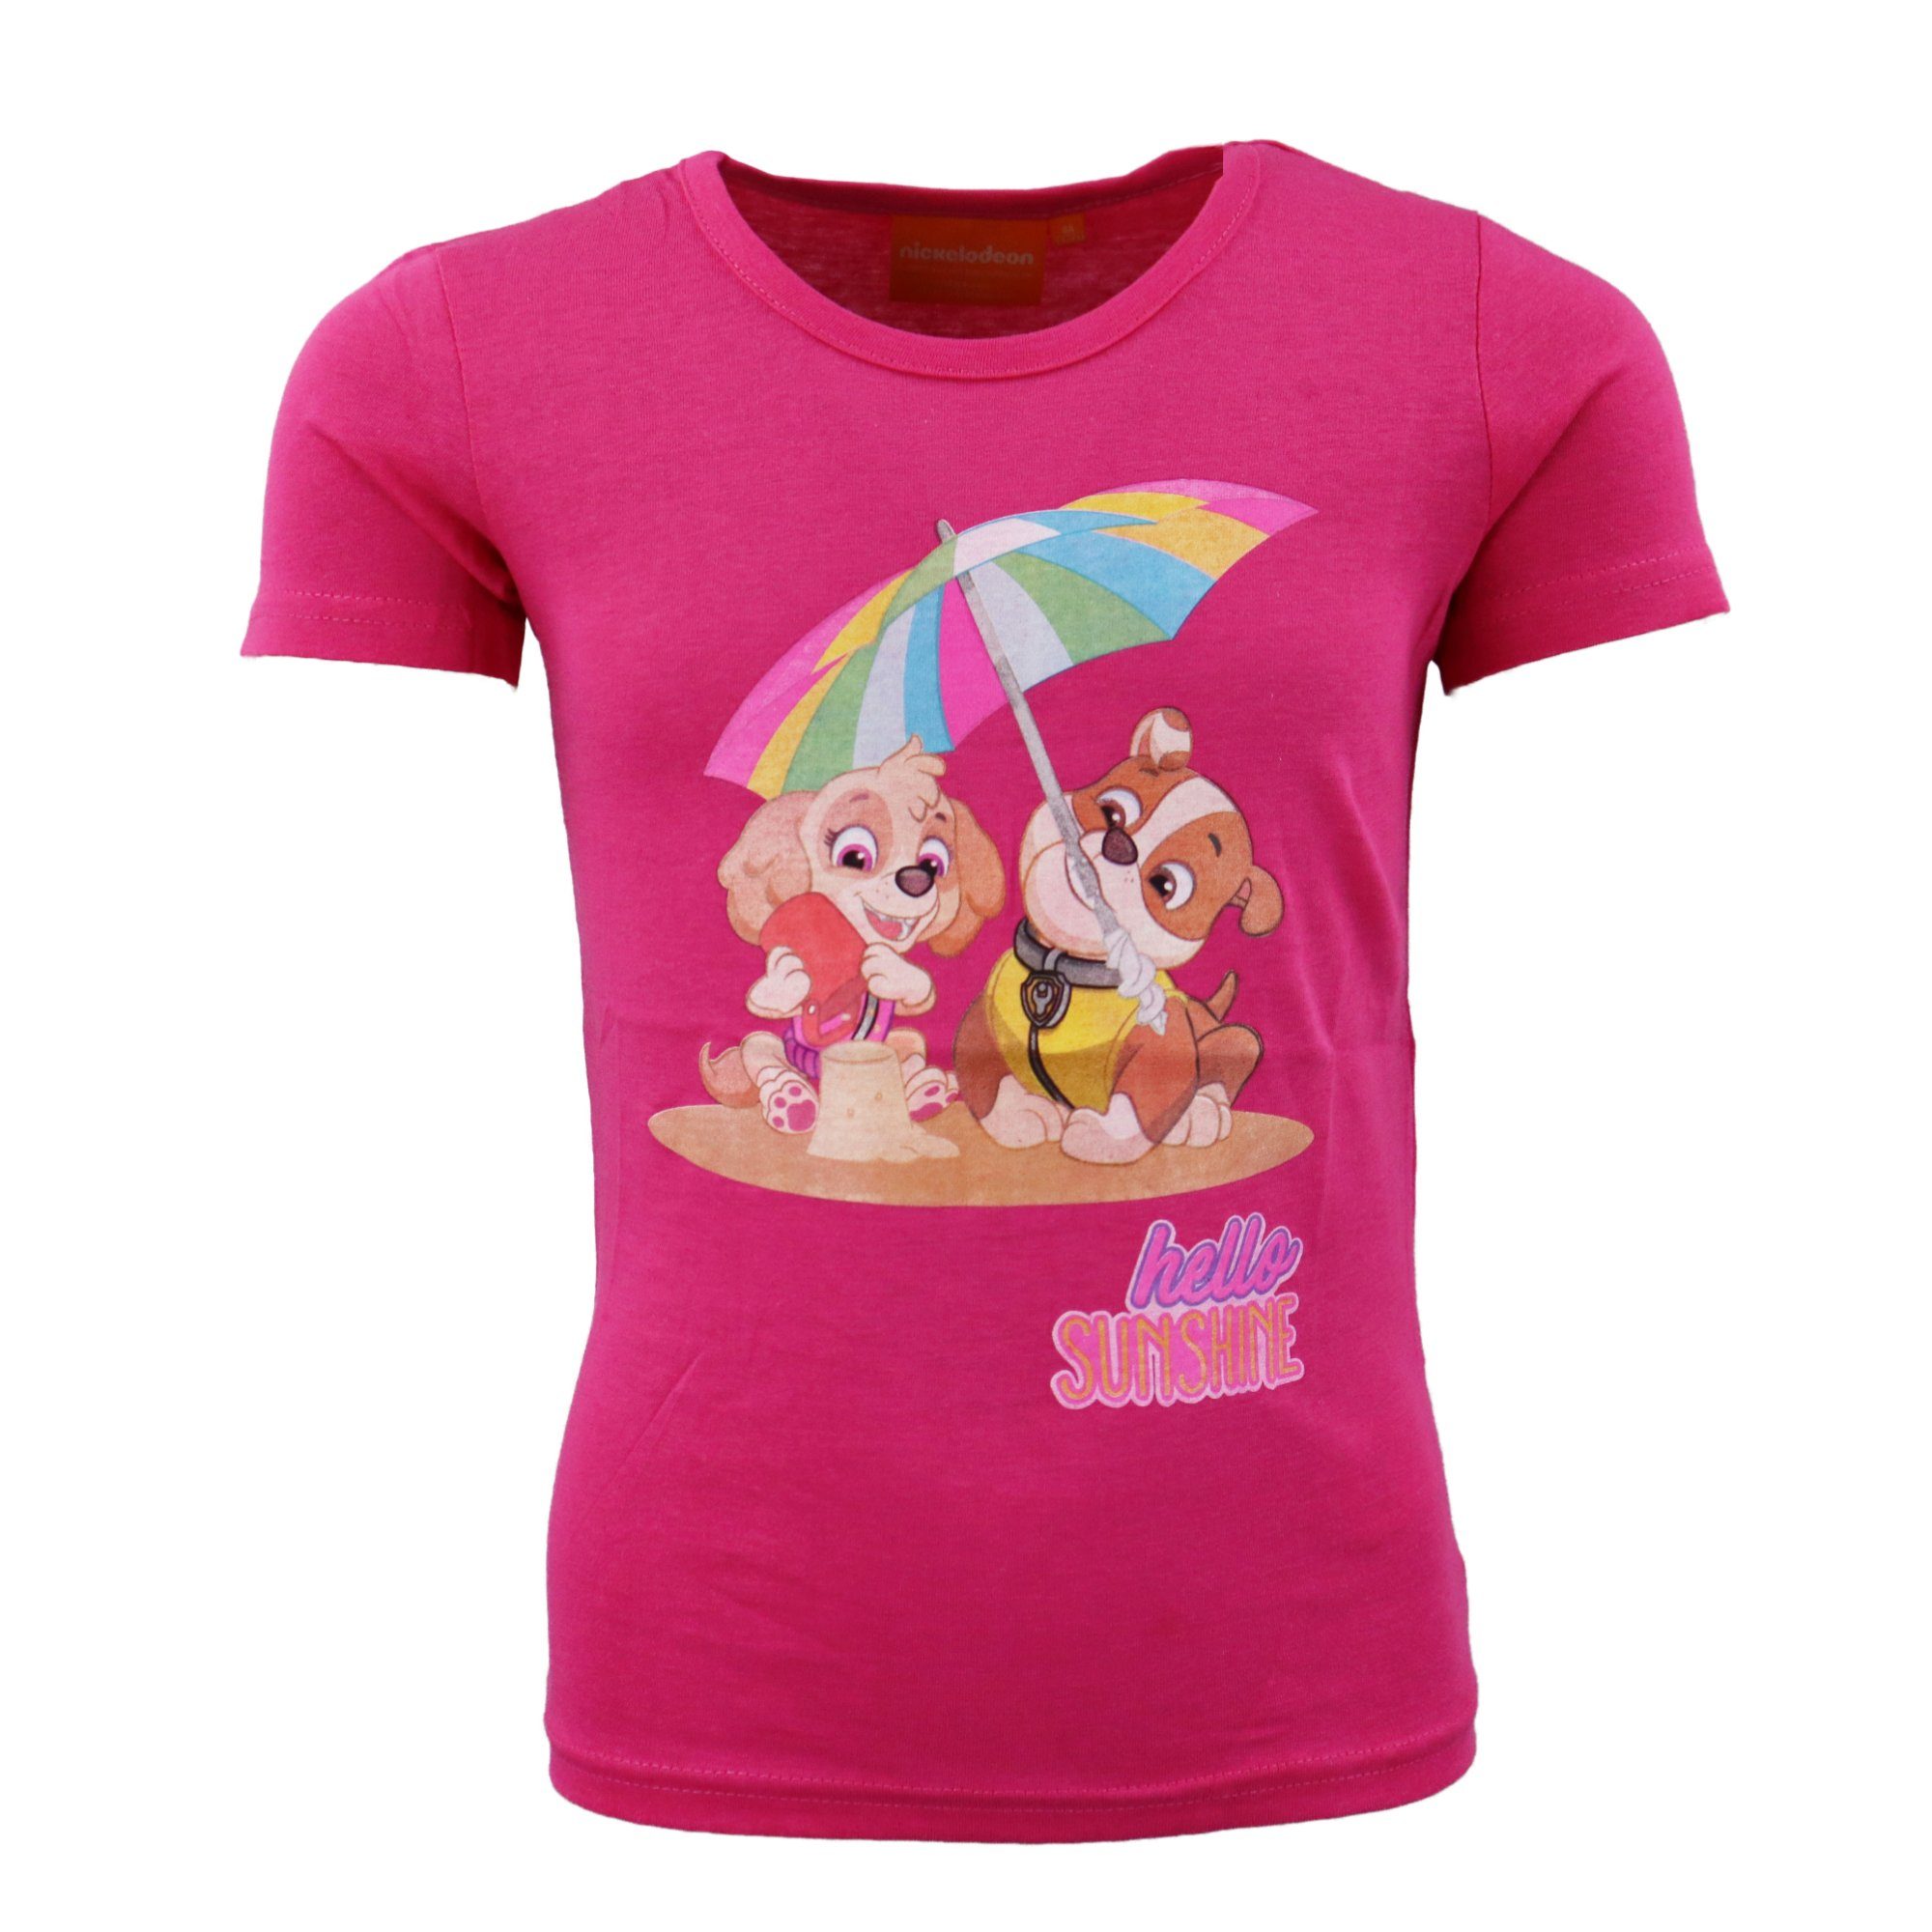 PAW PATROL Print-Shirt Paw Patrol Skye Marshall Kinder T-Shirt Gr. 98 bis 128, 100% Baumwolle Pink